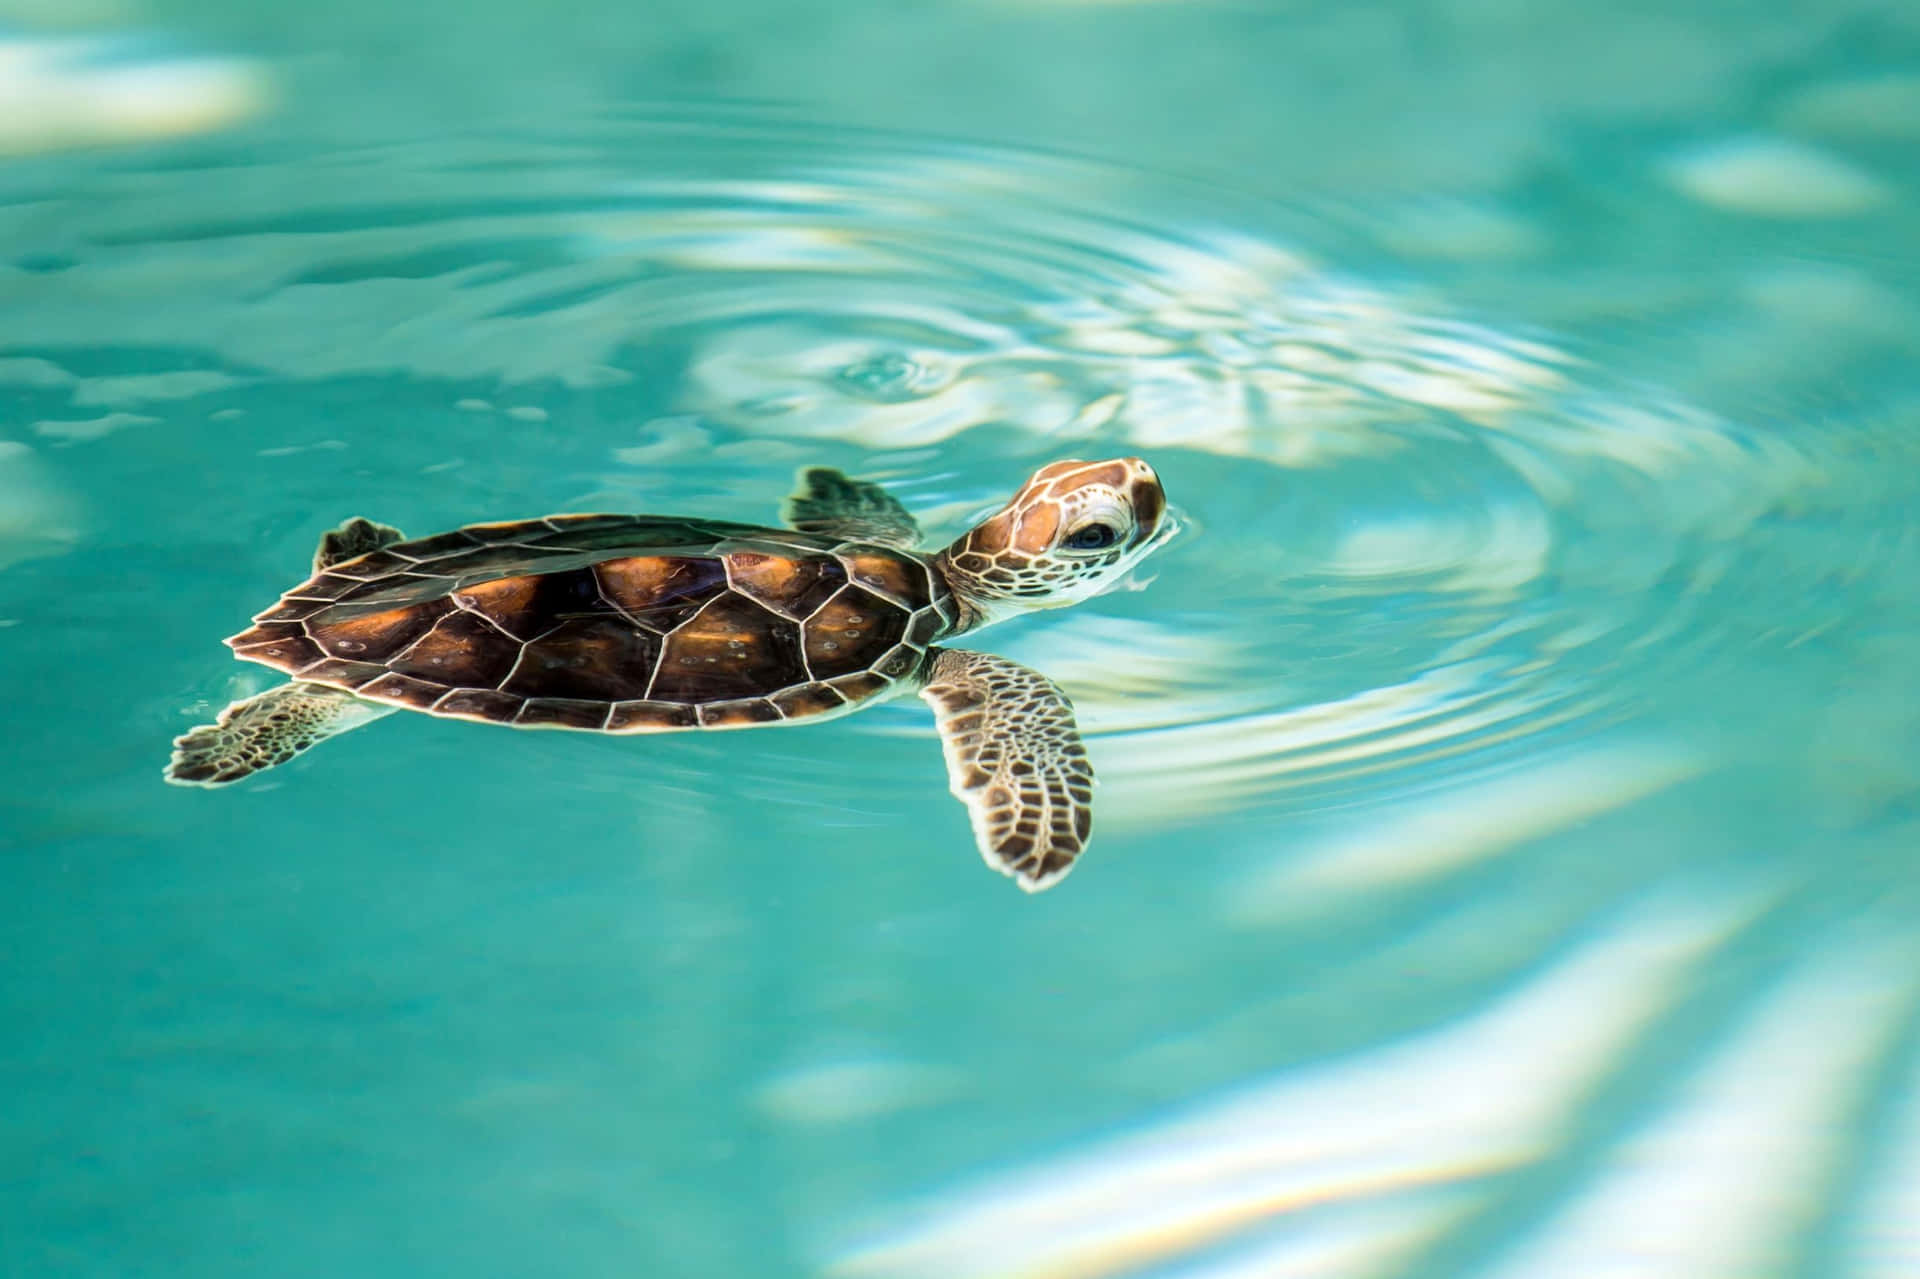 Image  A Cute Turtle Swimming in an Aquarium